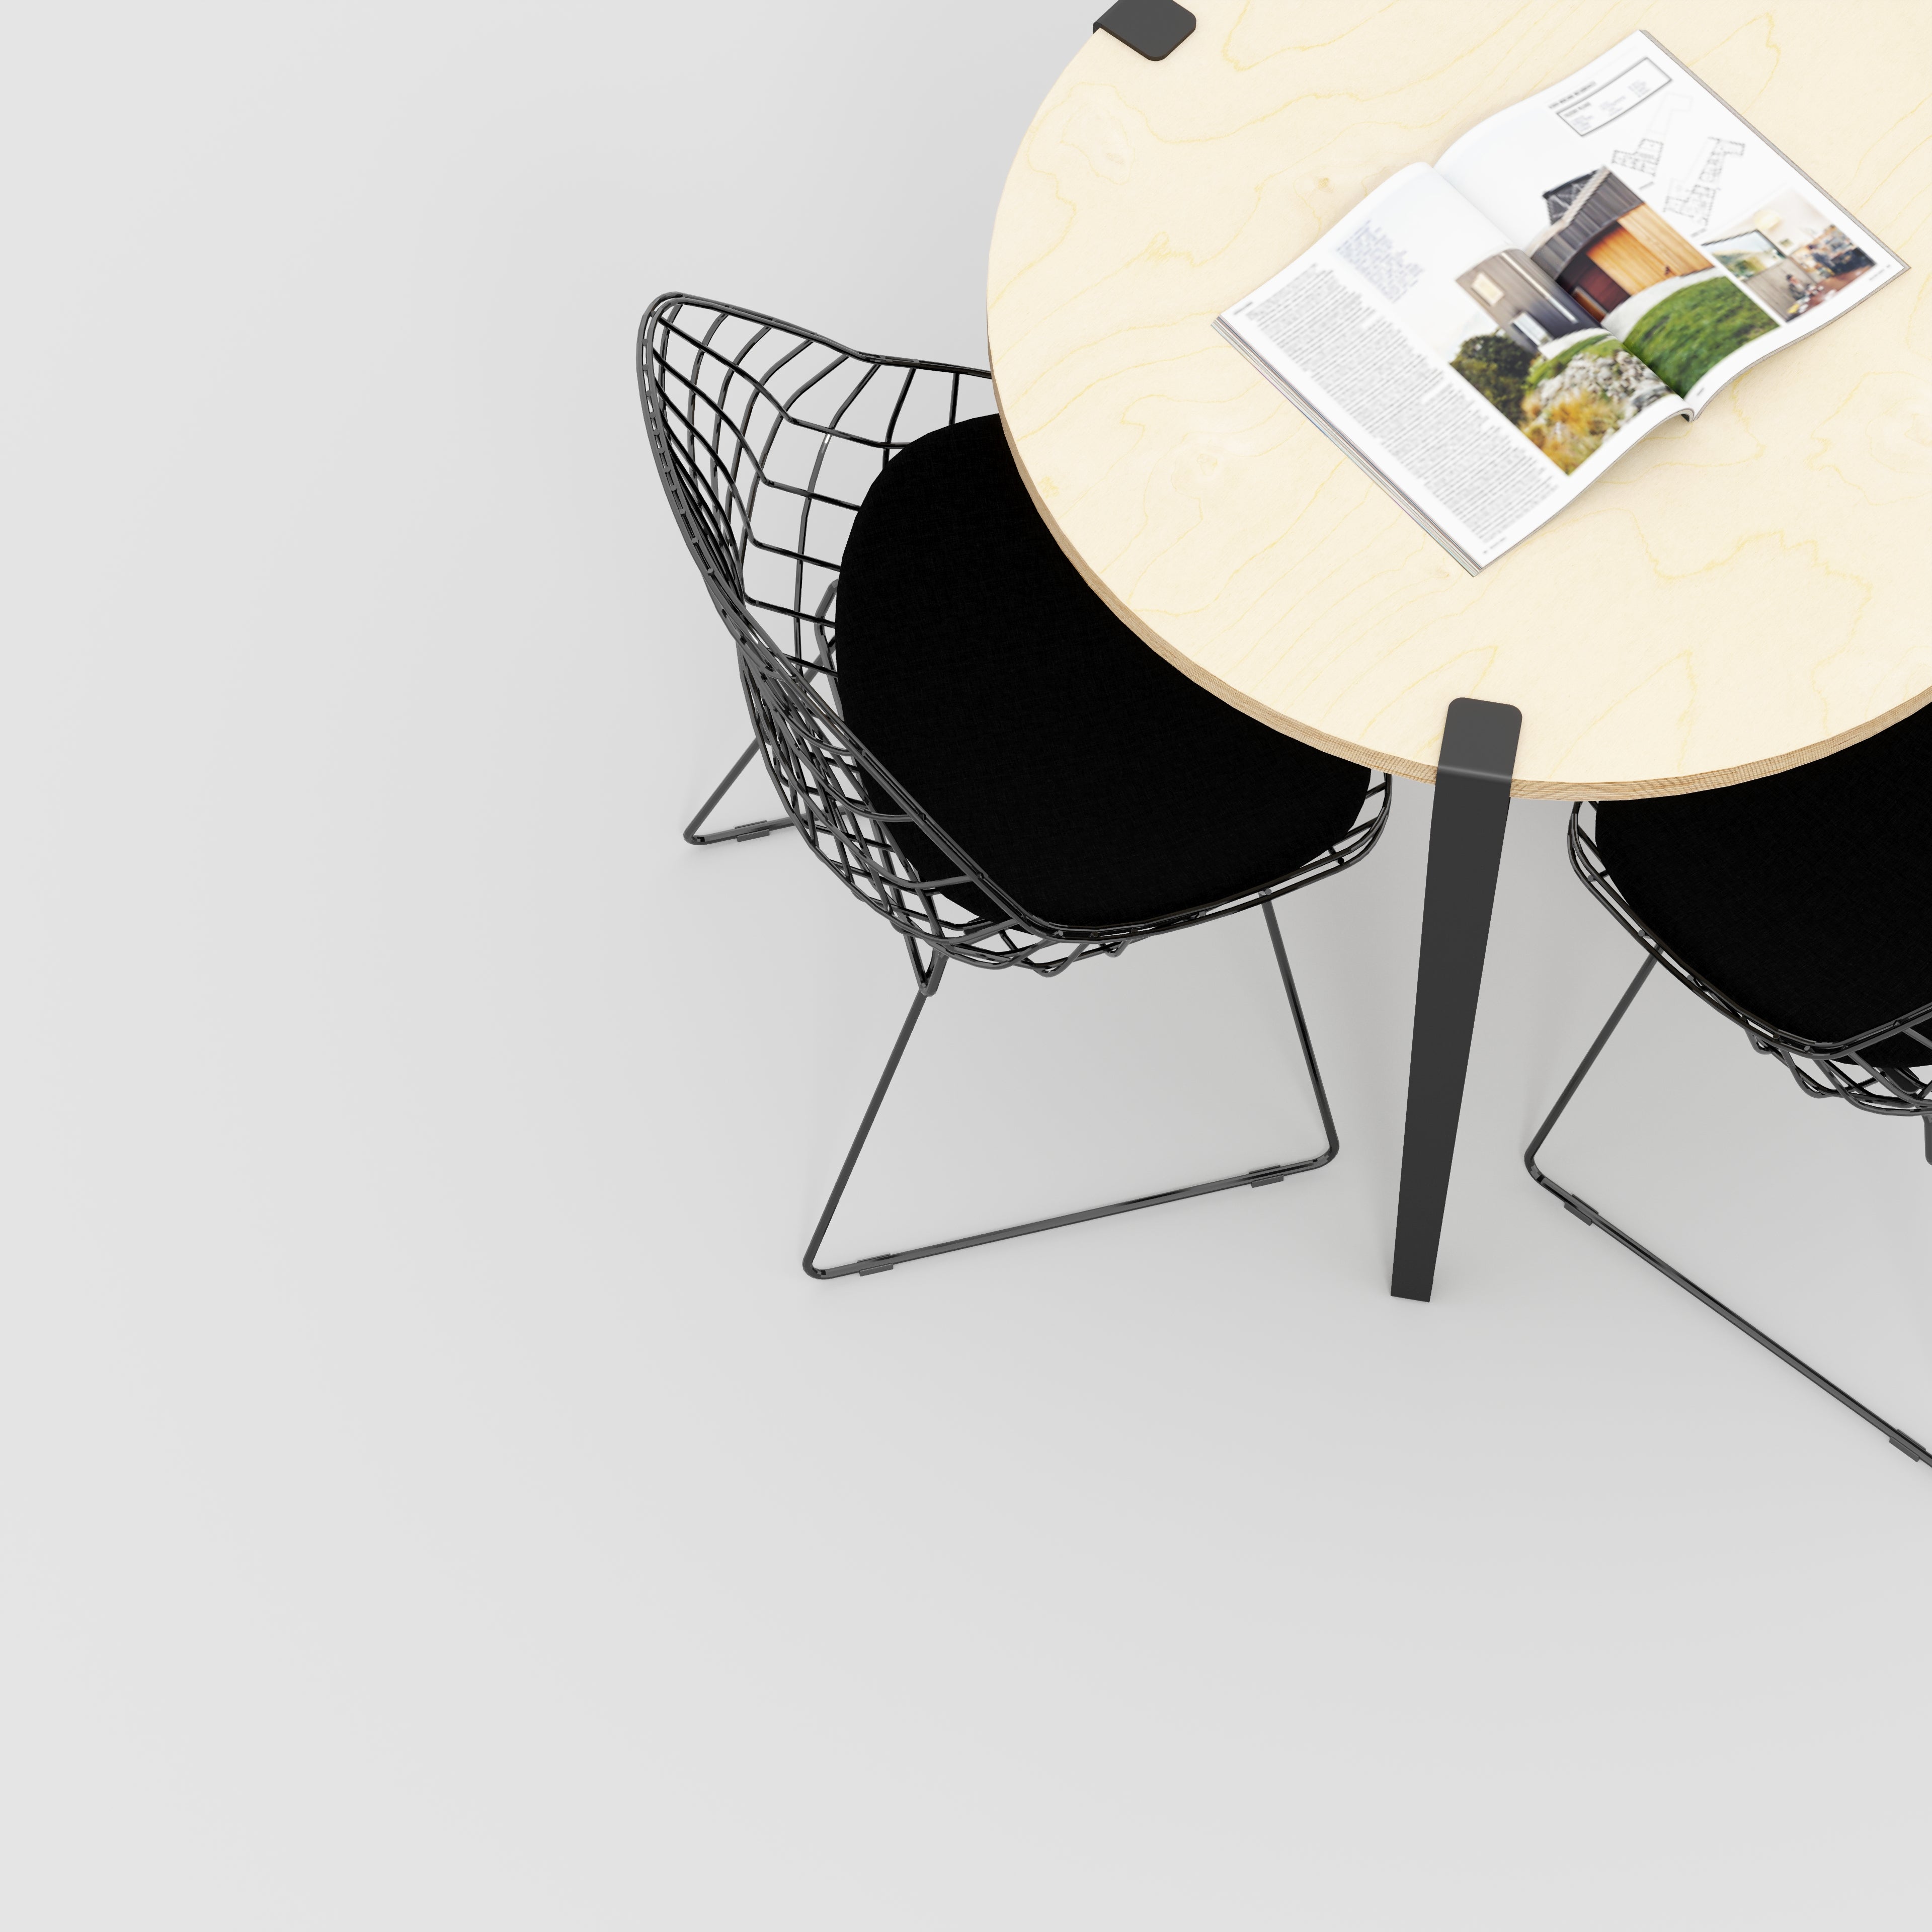 Round Table with Black Tiptoe Legs - Plywood Birch - 800(dia) x 750(h)